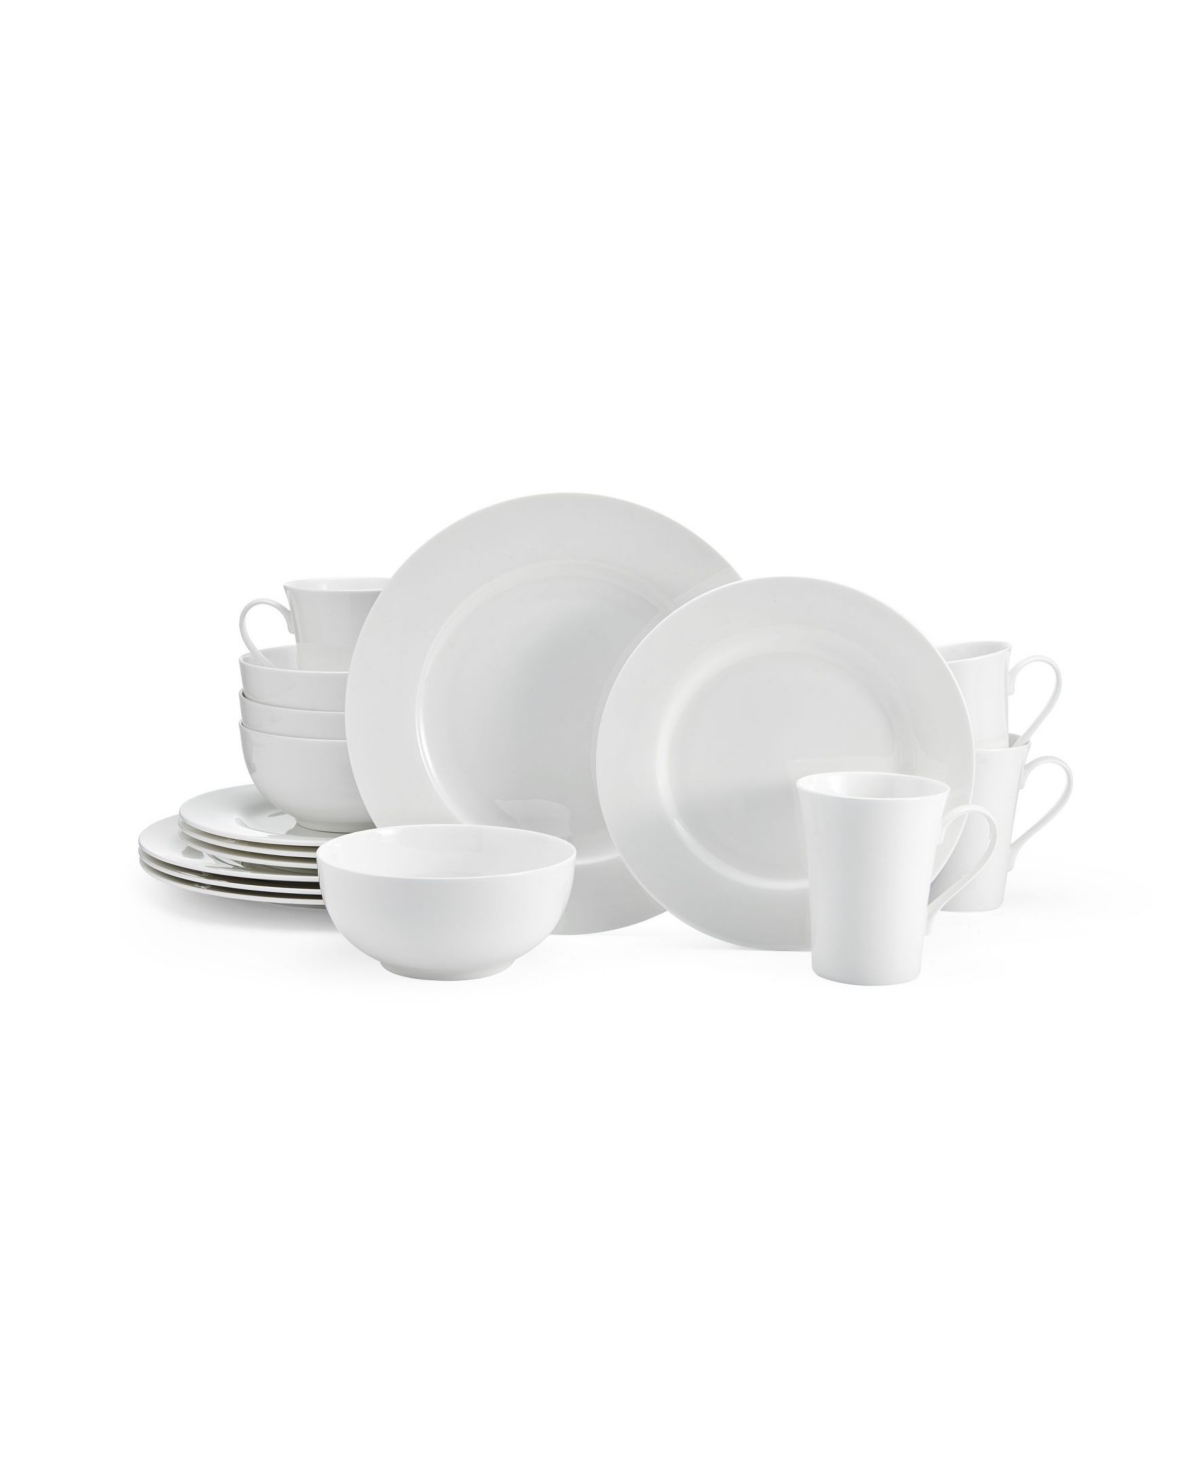 Delray 16 Piece Dinnerware Set, Service for 4 - White